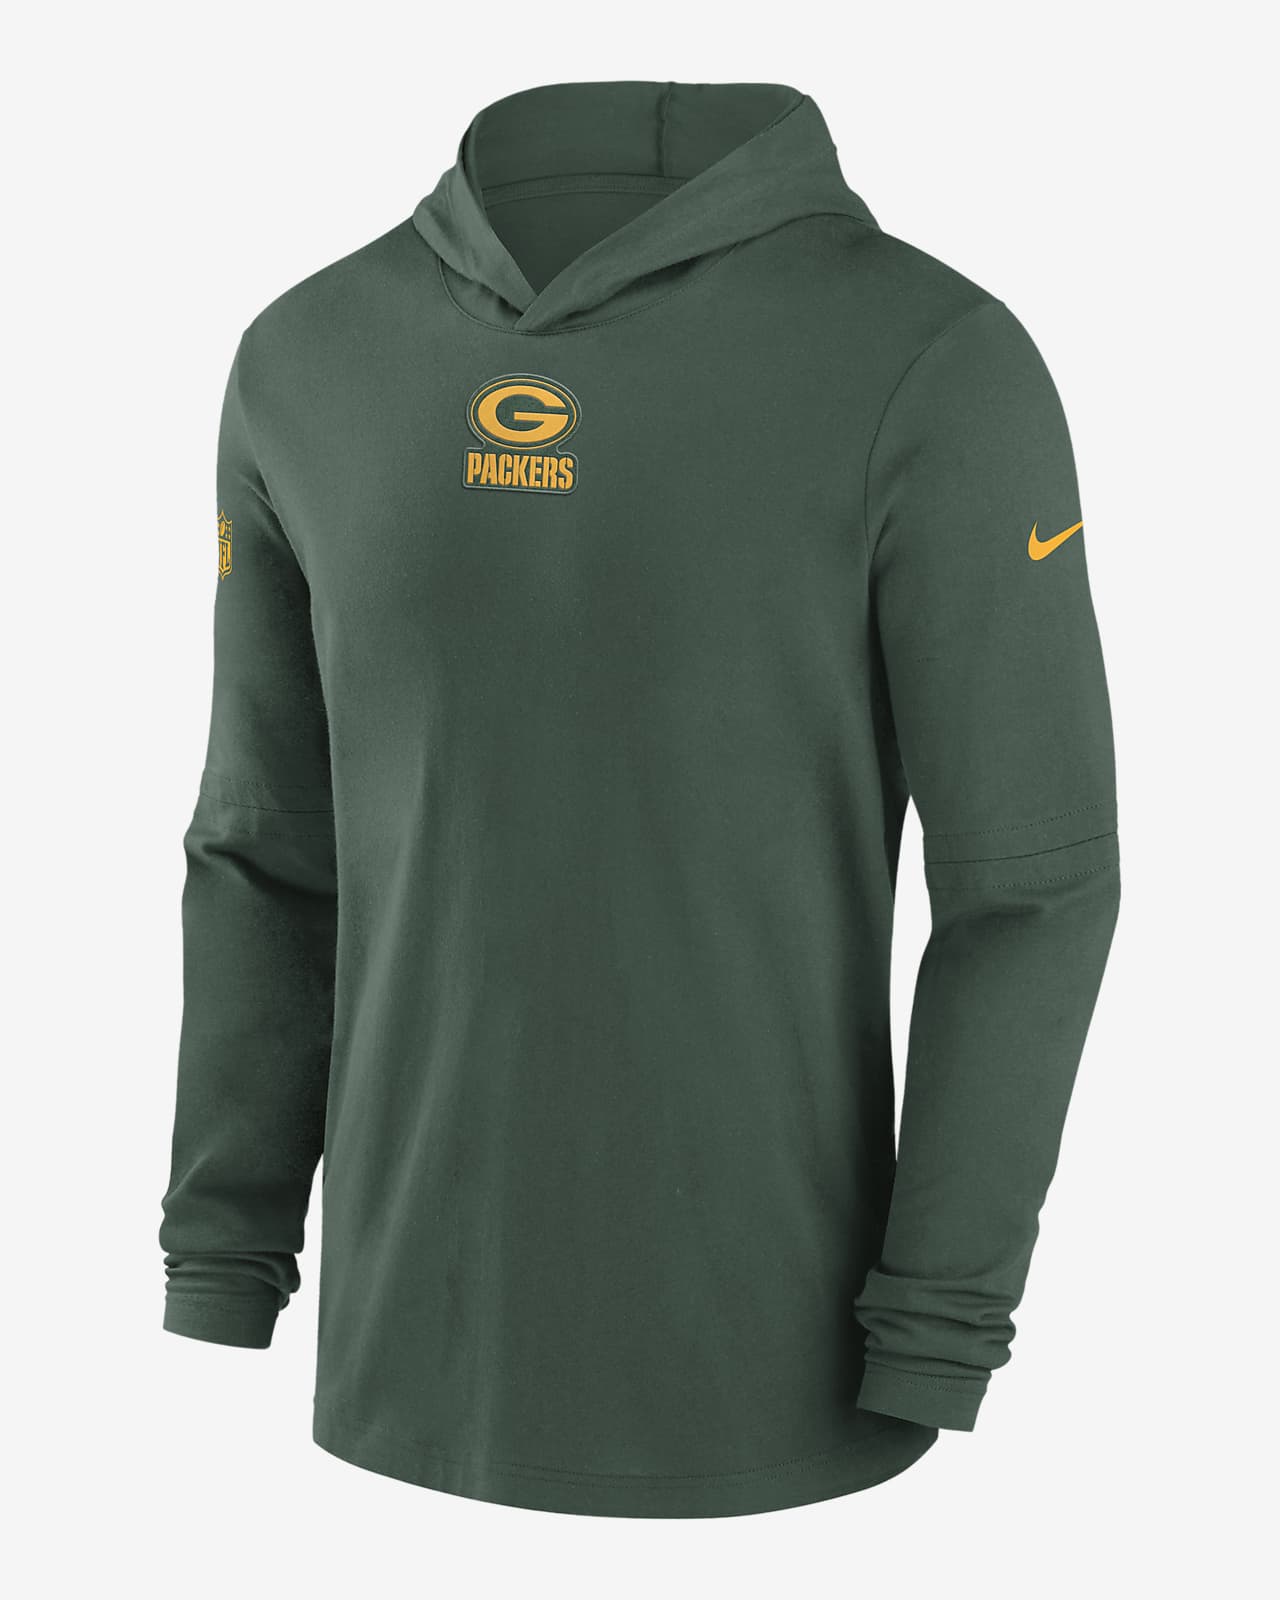 Green Bay Packers Sideline Men’s Nike Dri-FIT NFL Long-Sleeve Hooded Top